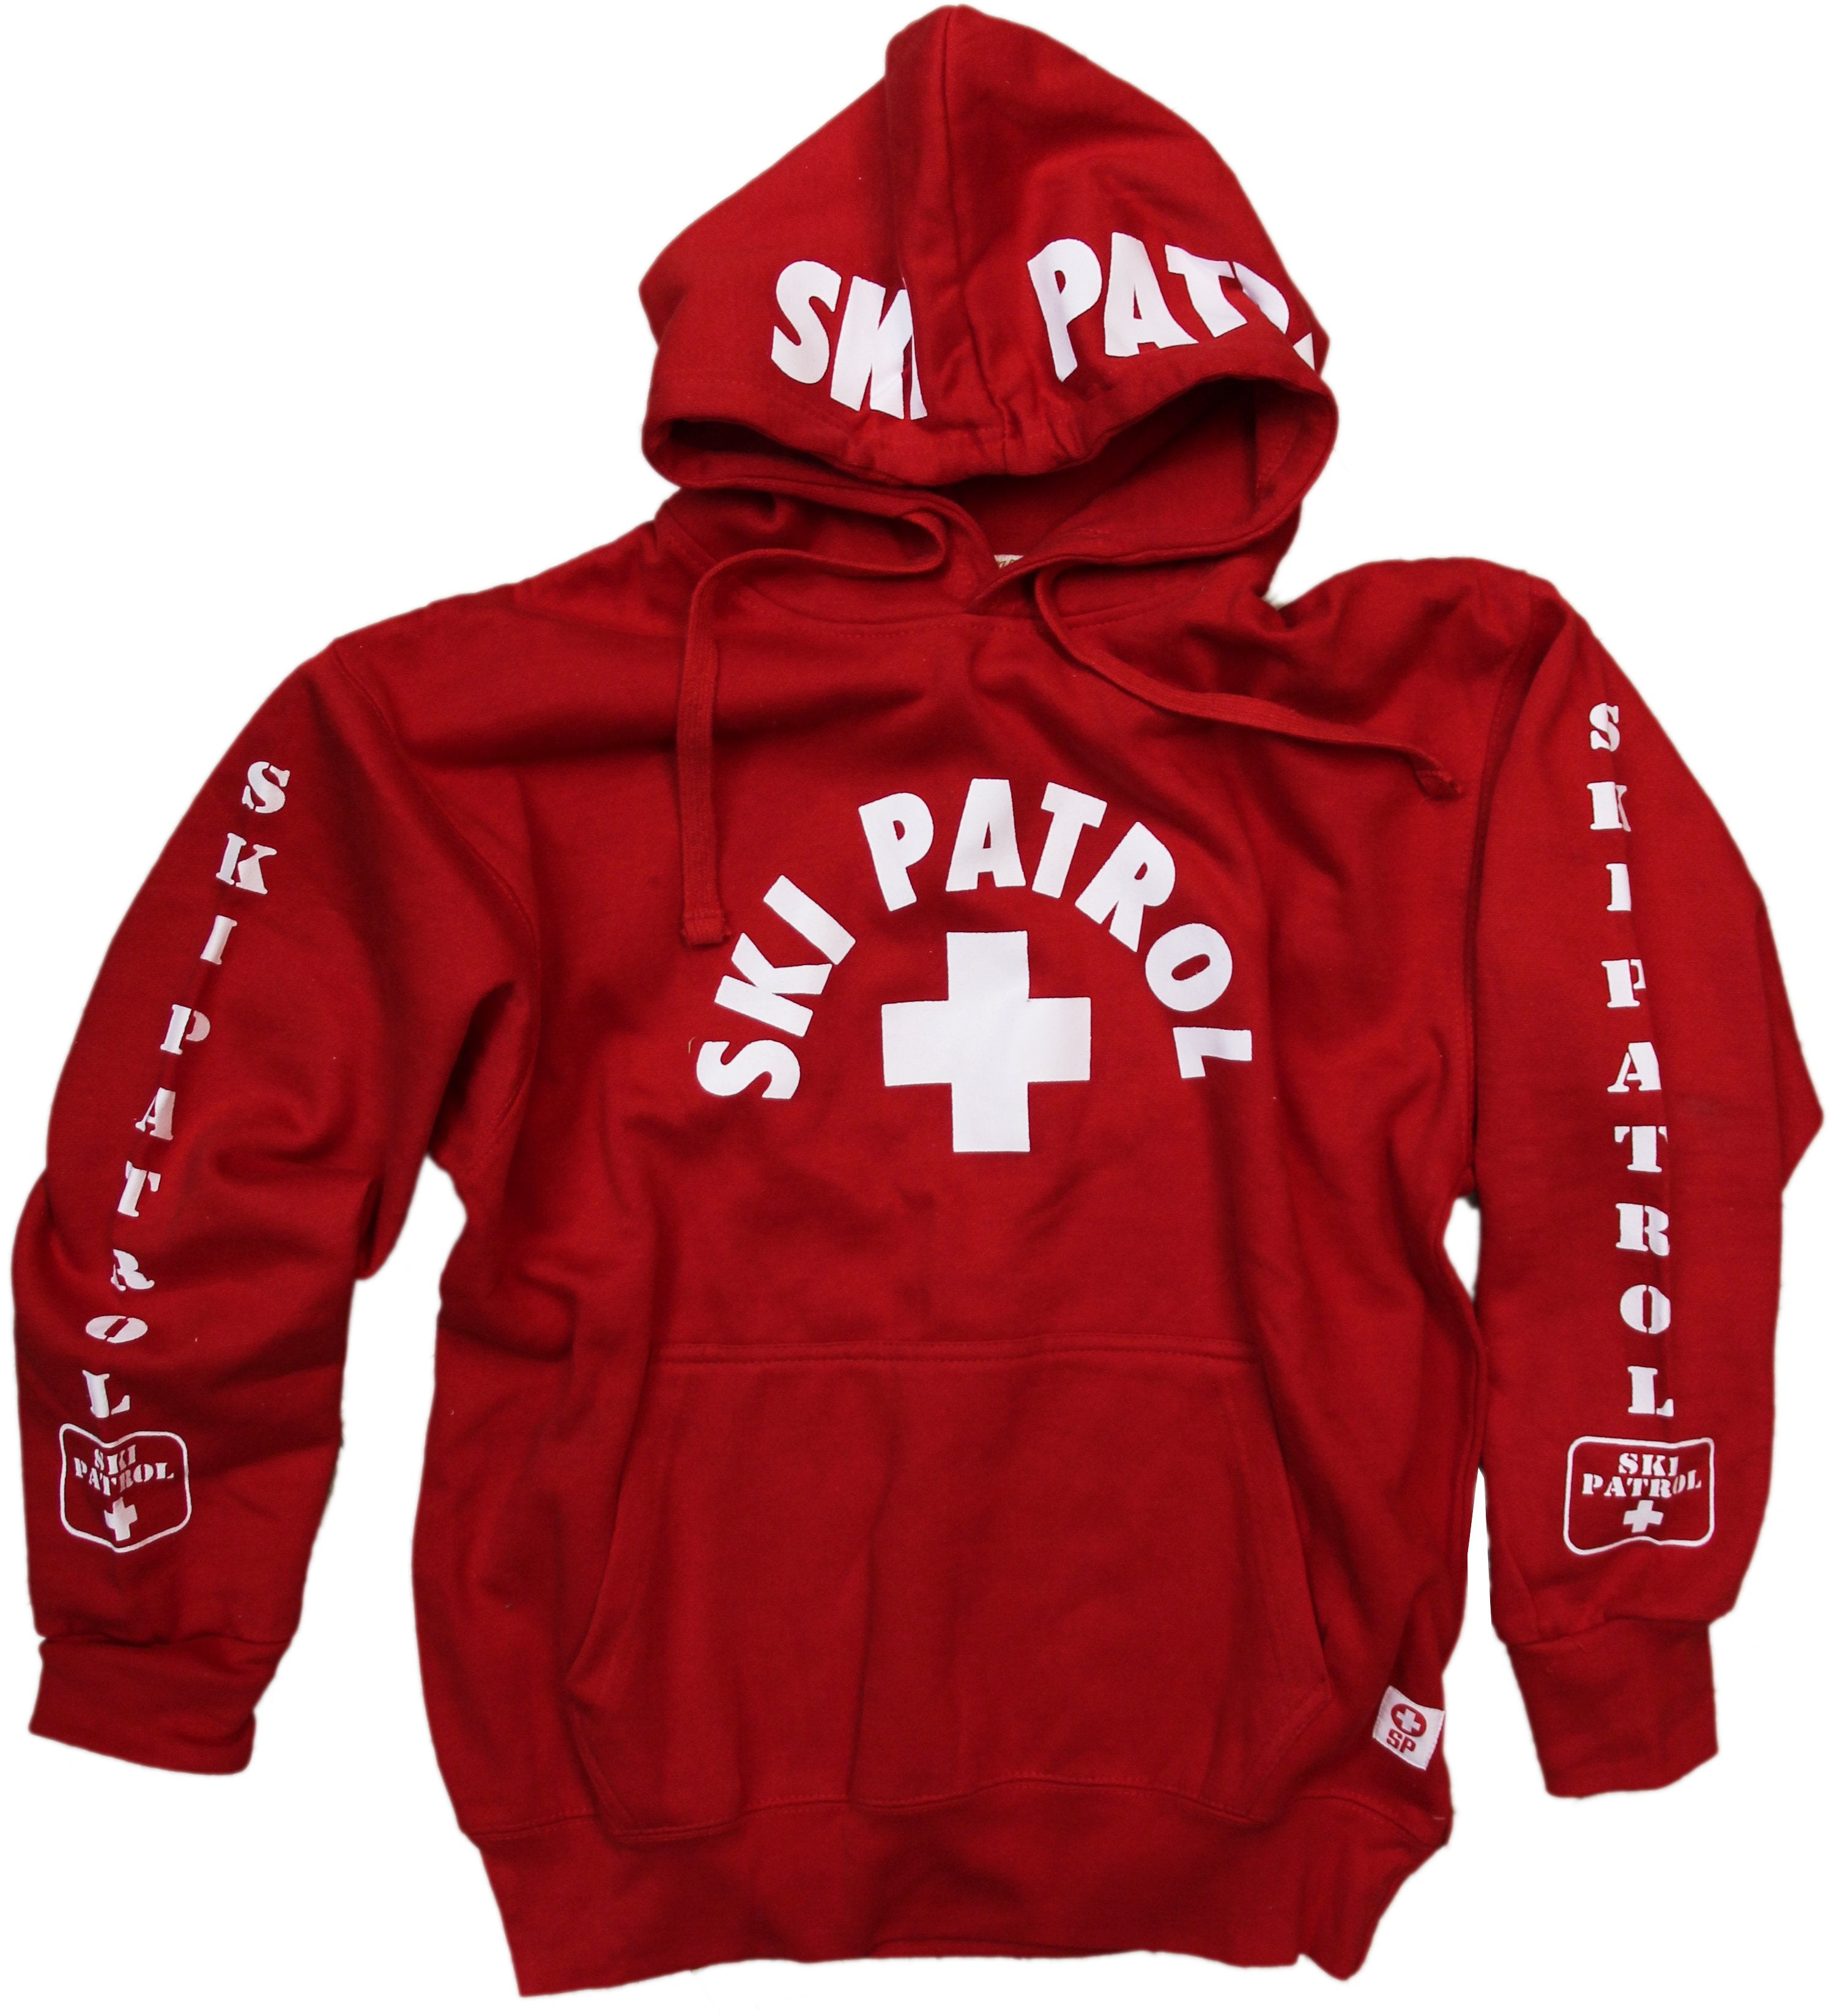 SKI PATROL Sweatshirt Roter Hoodie Guard Patrol Shirt Geschenk Roter weißer Skimantel